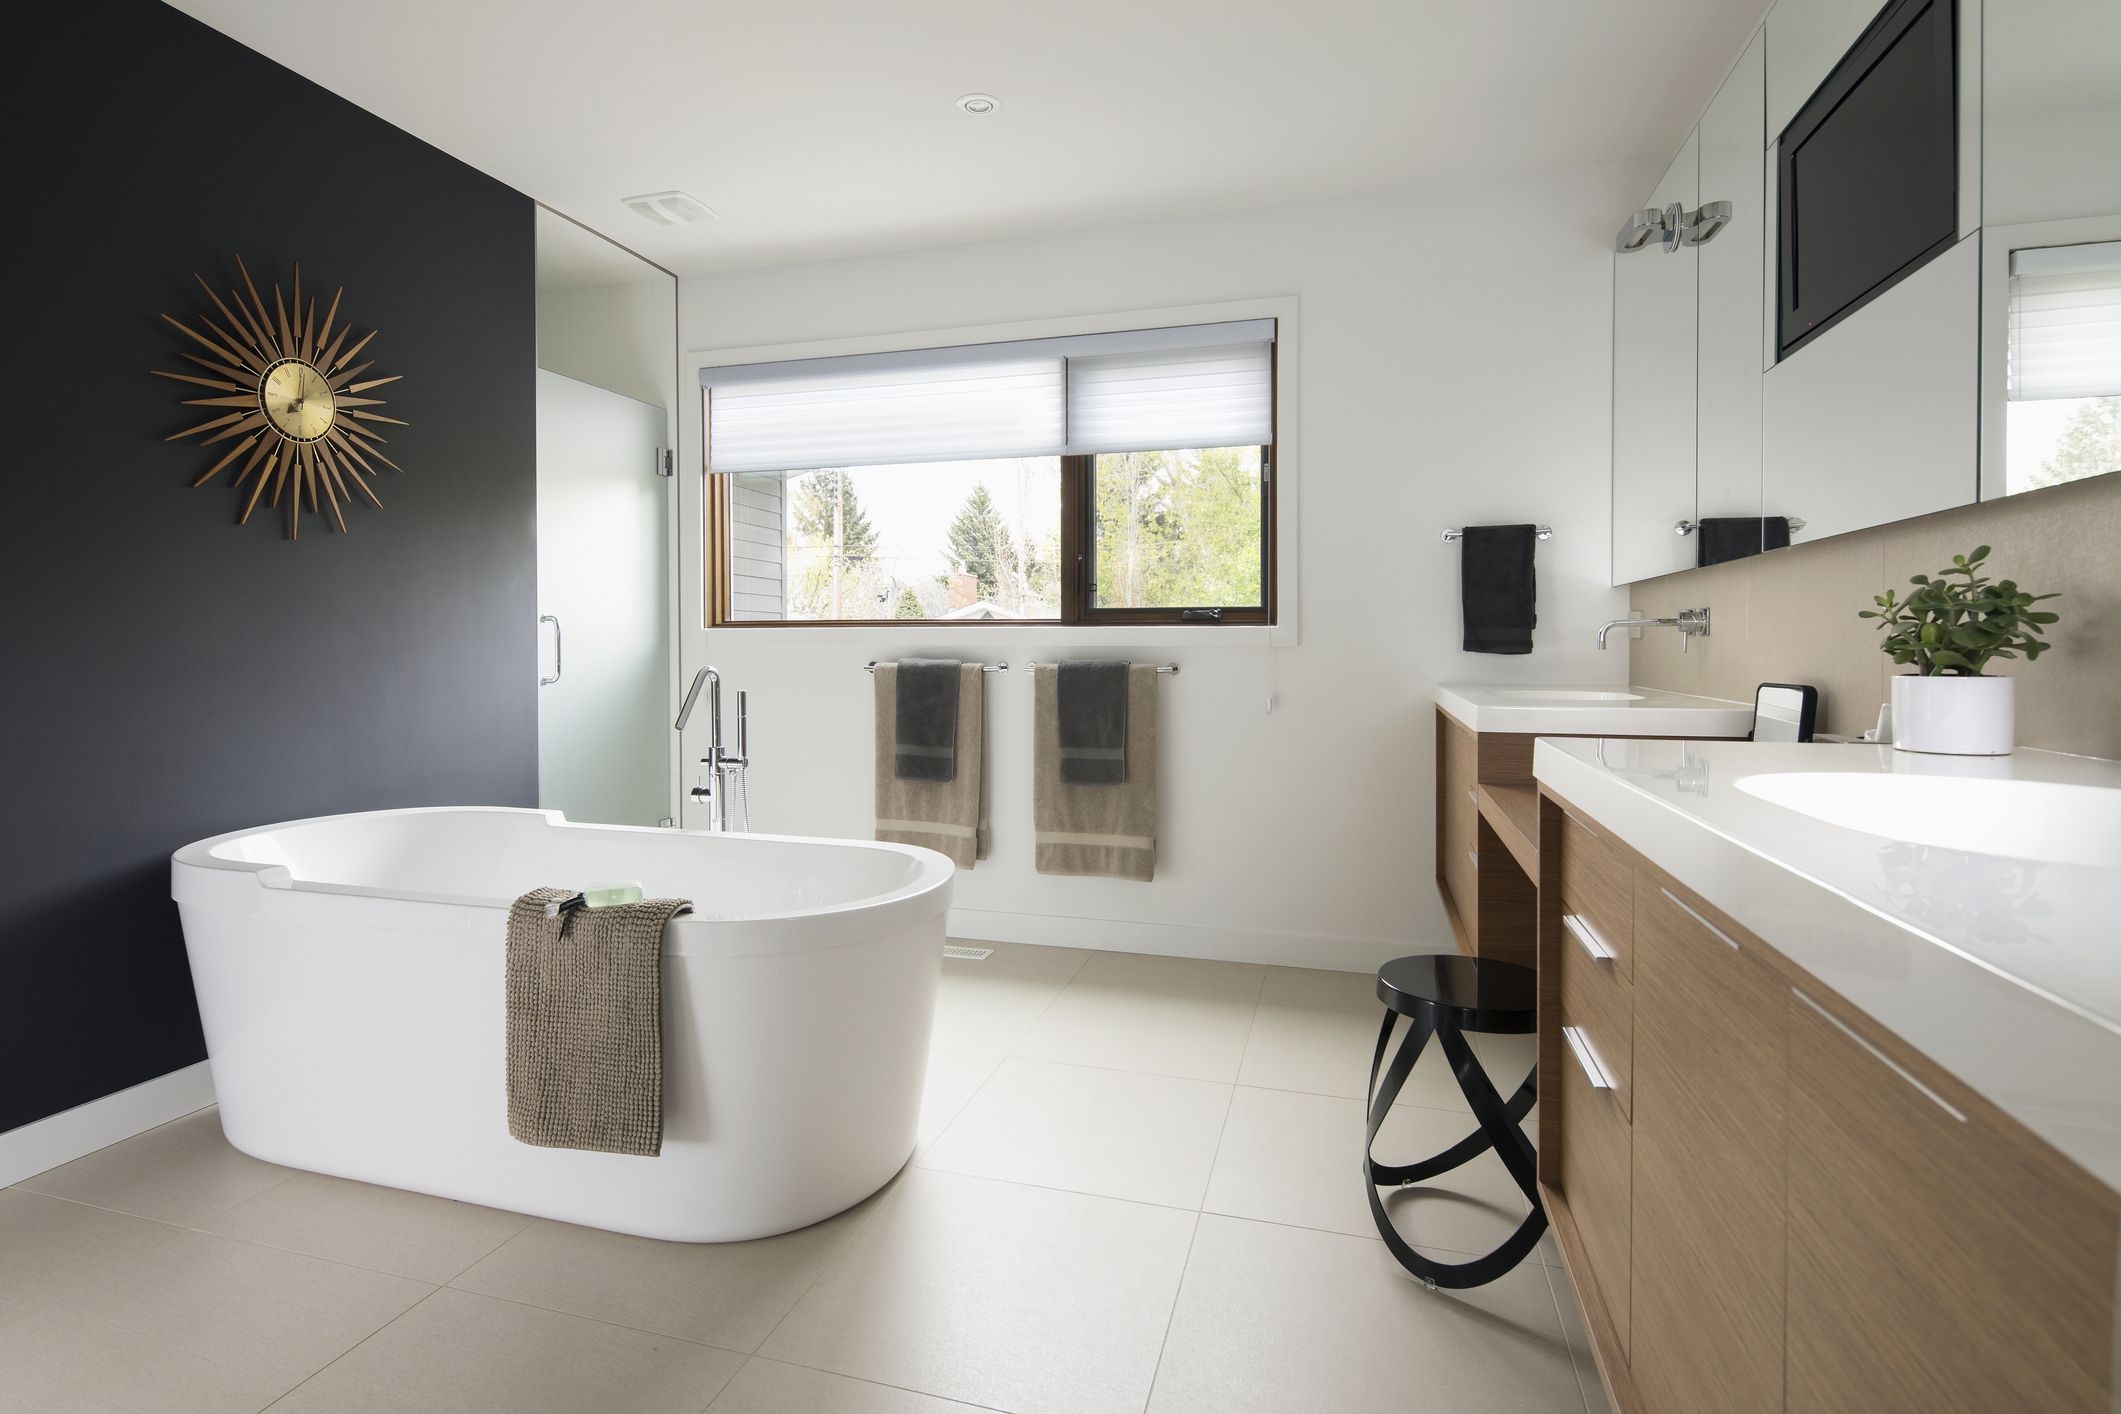 Must-Have Bathroom Design Features in 2020 - Bathroom Design Features